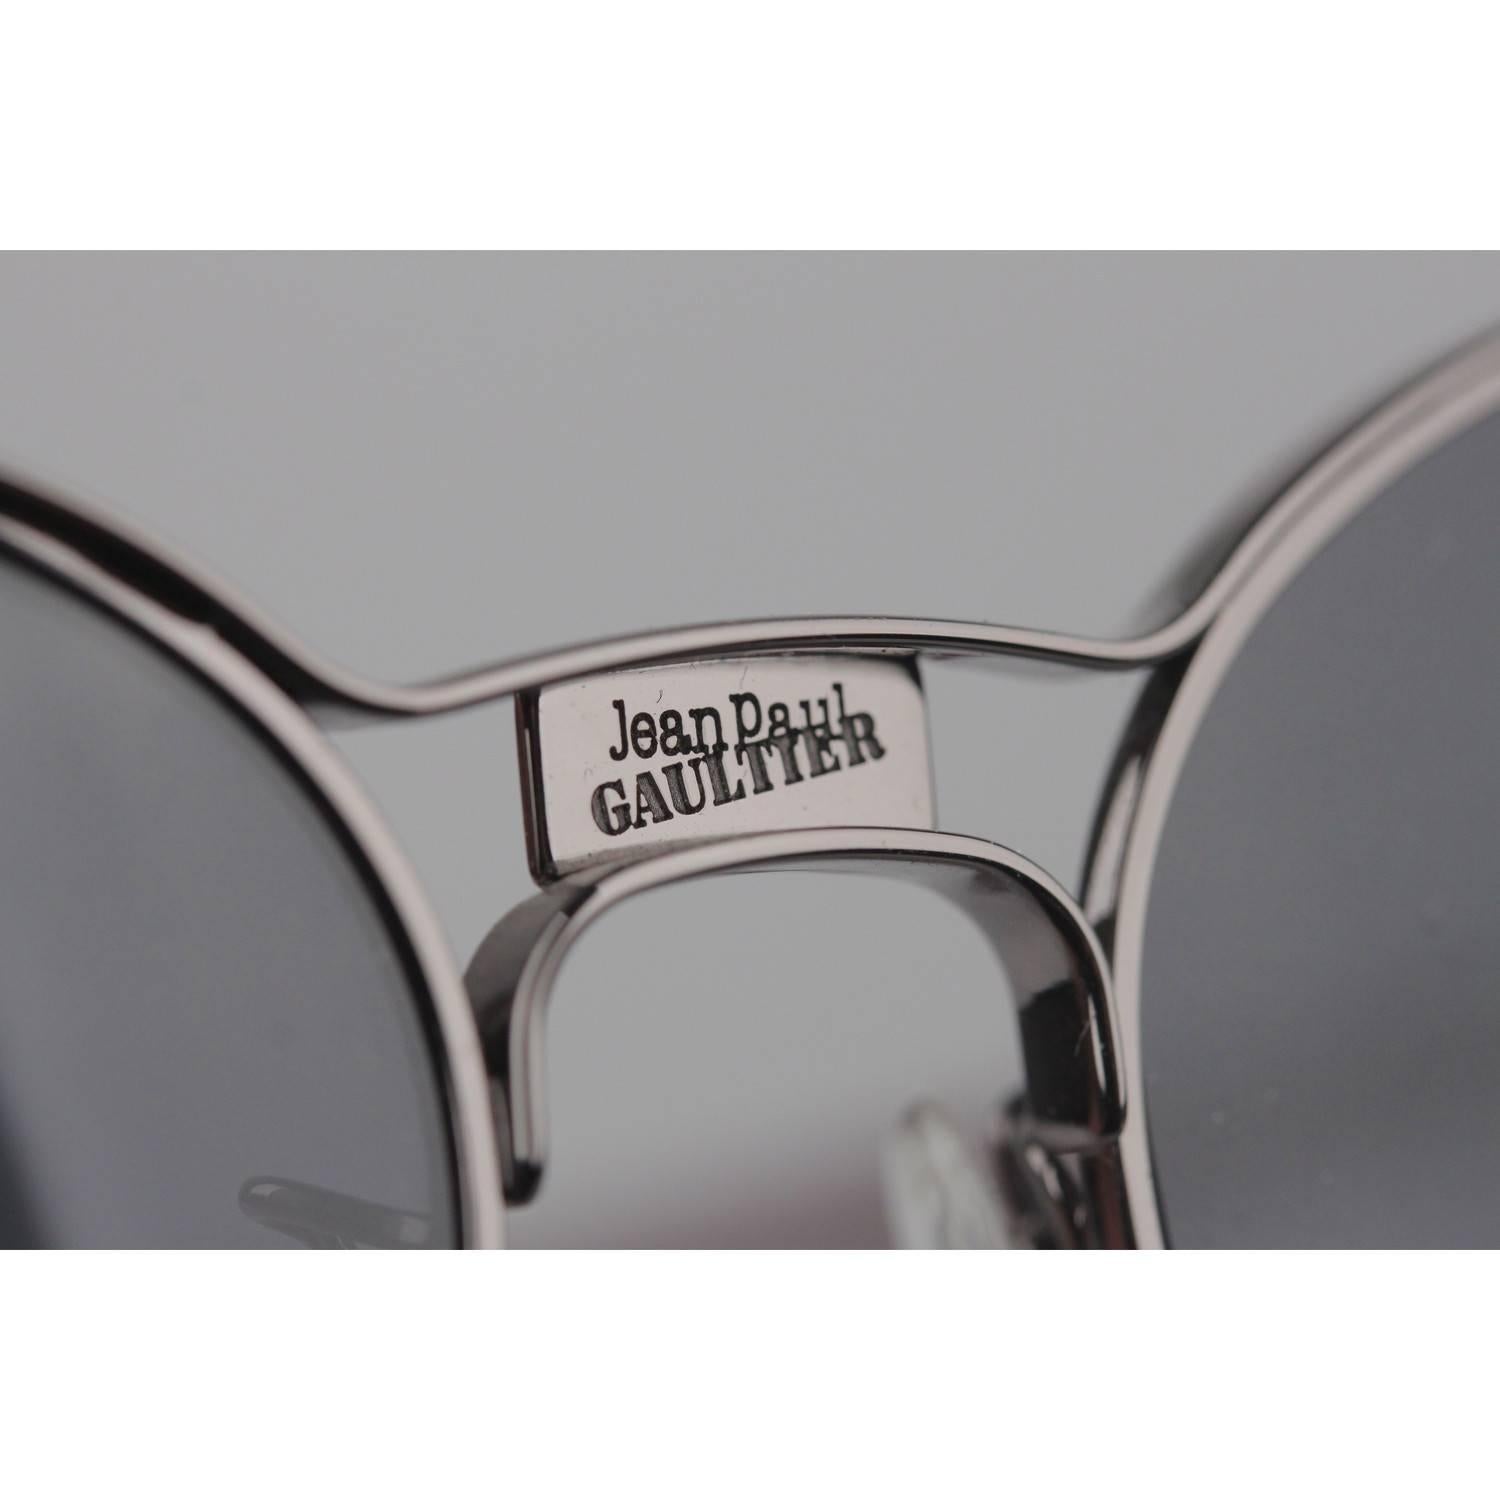 JEAN PAUL GAULTIER Round Gray Unisex Sunglasses SJP001 New Old Stock  7